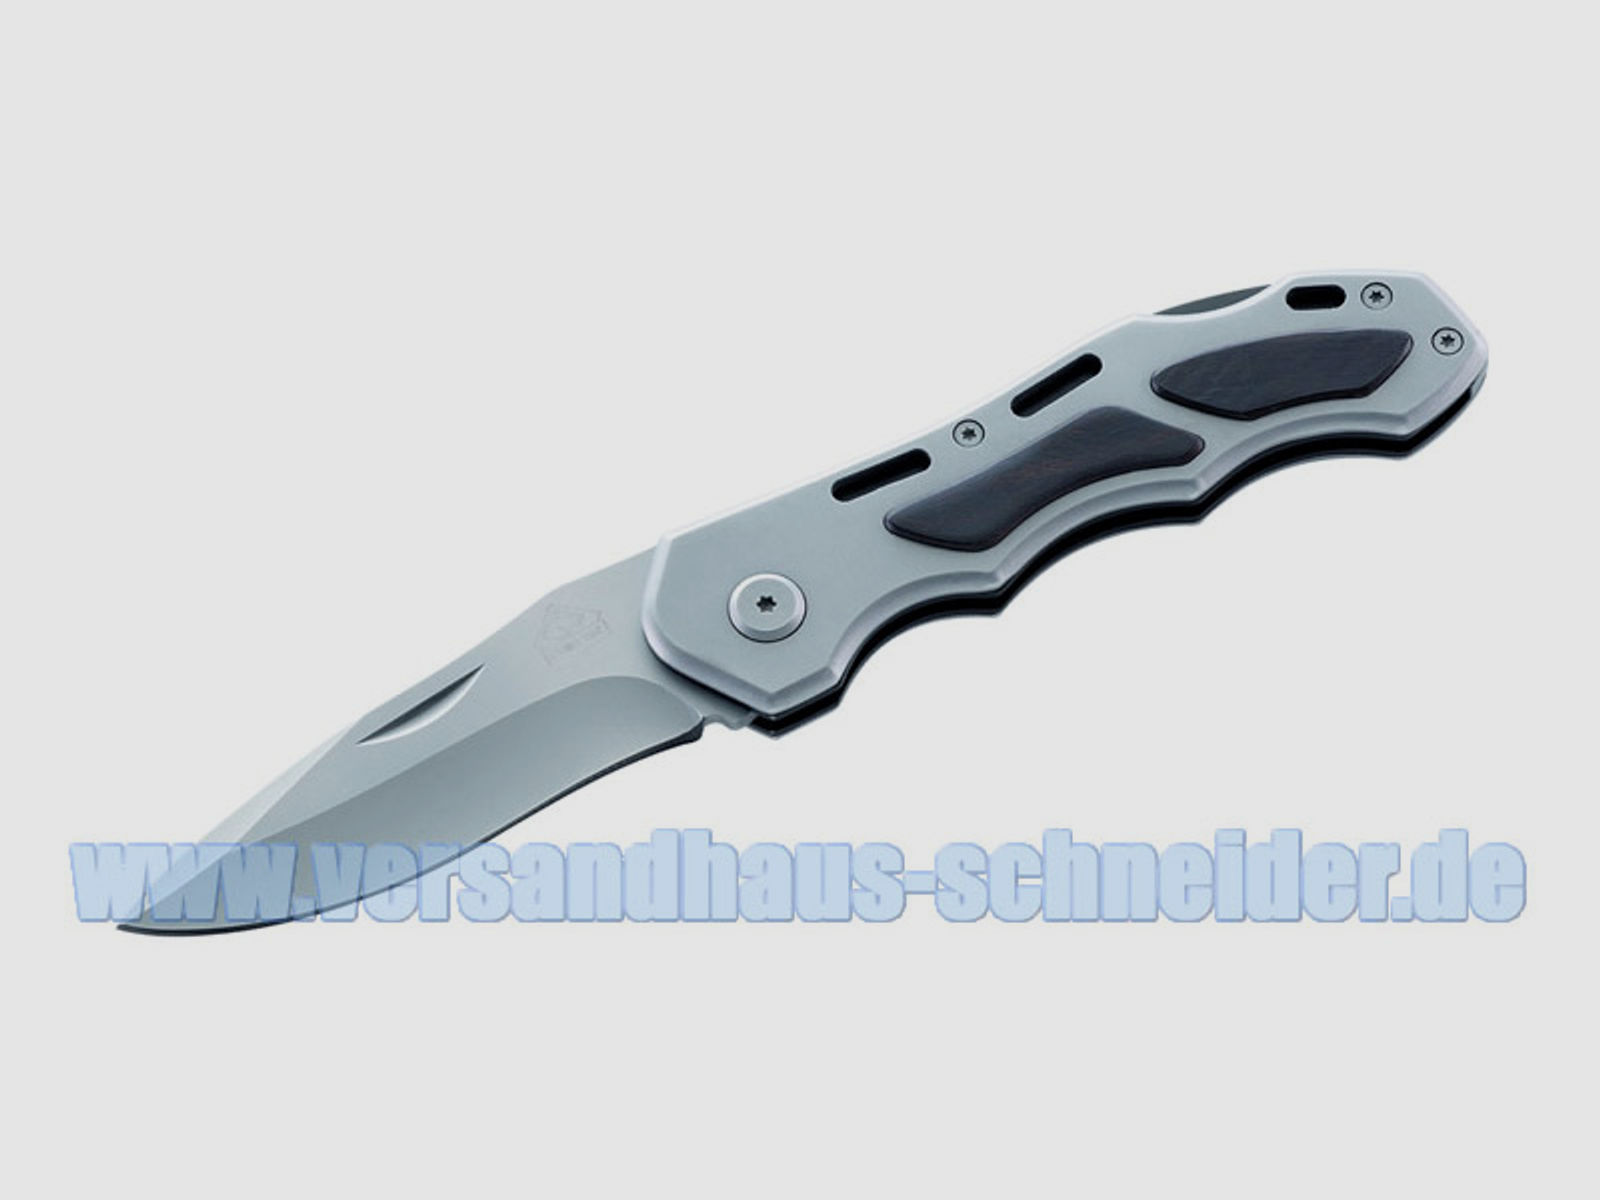 Taschenmesser Puma Tec Stahl AISI 420 KlingenlĂ¤nge 7,7 cm (P18)